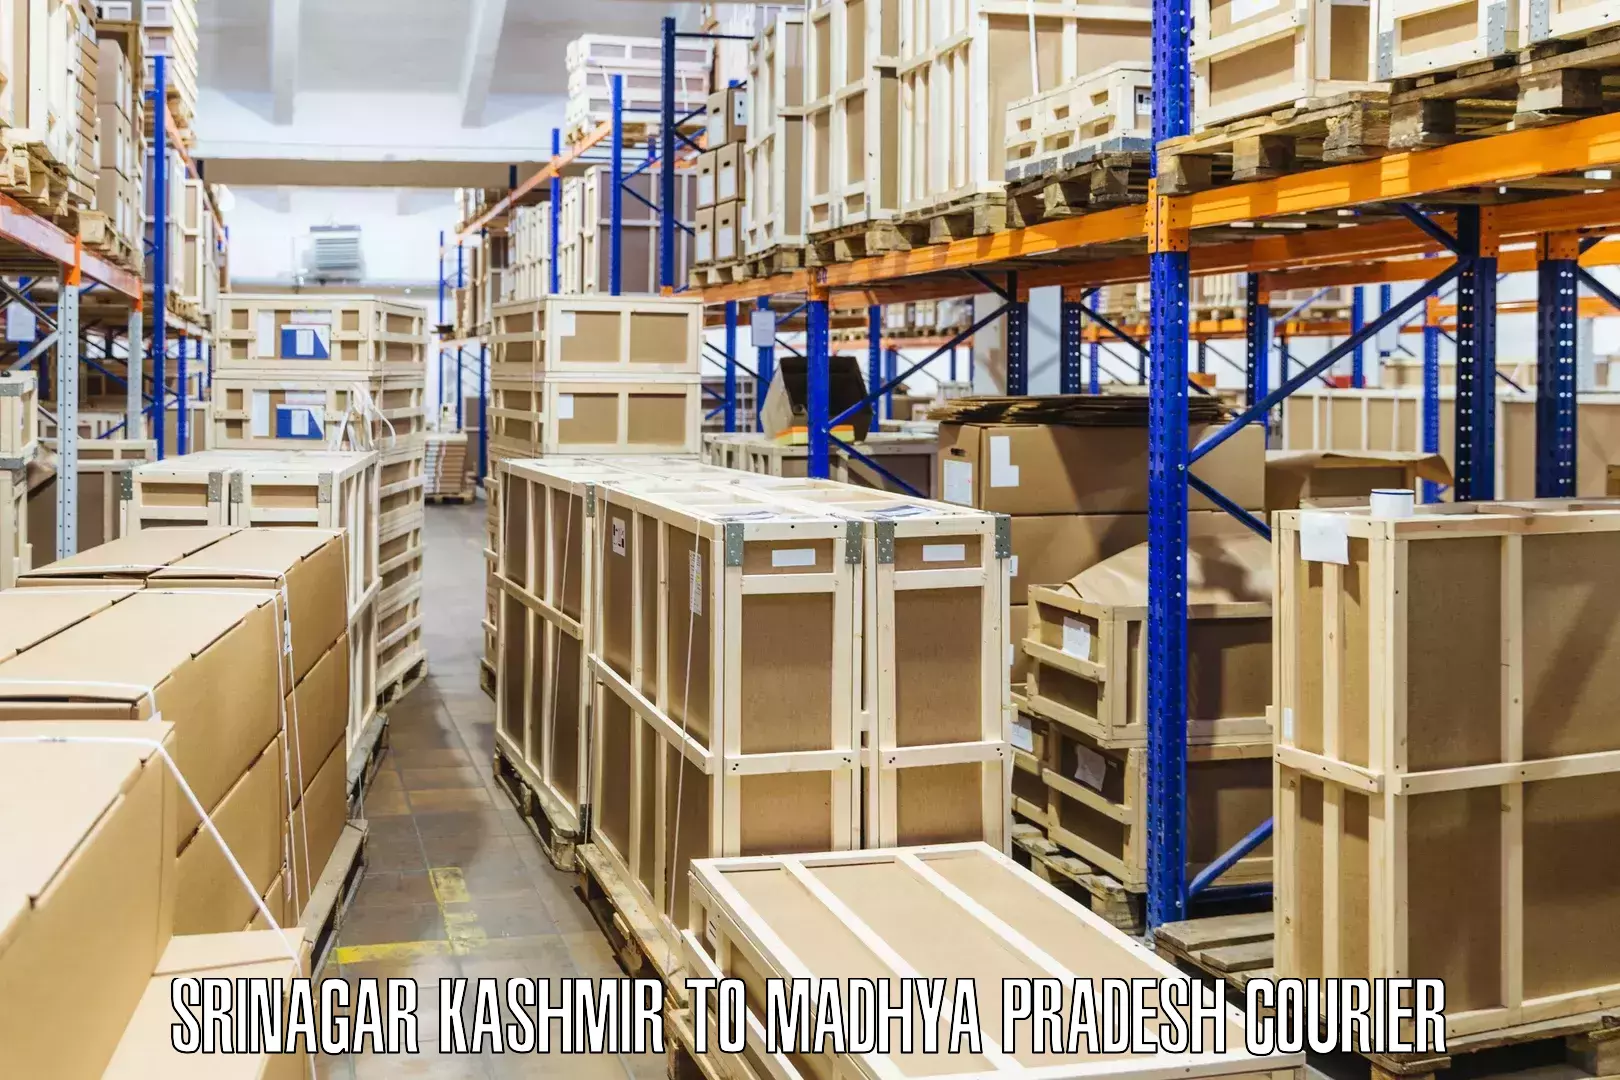 Reliable parcel services Srinagar Kashmir to Agar